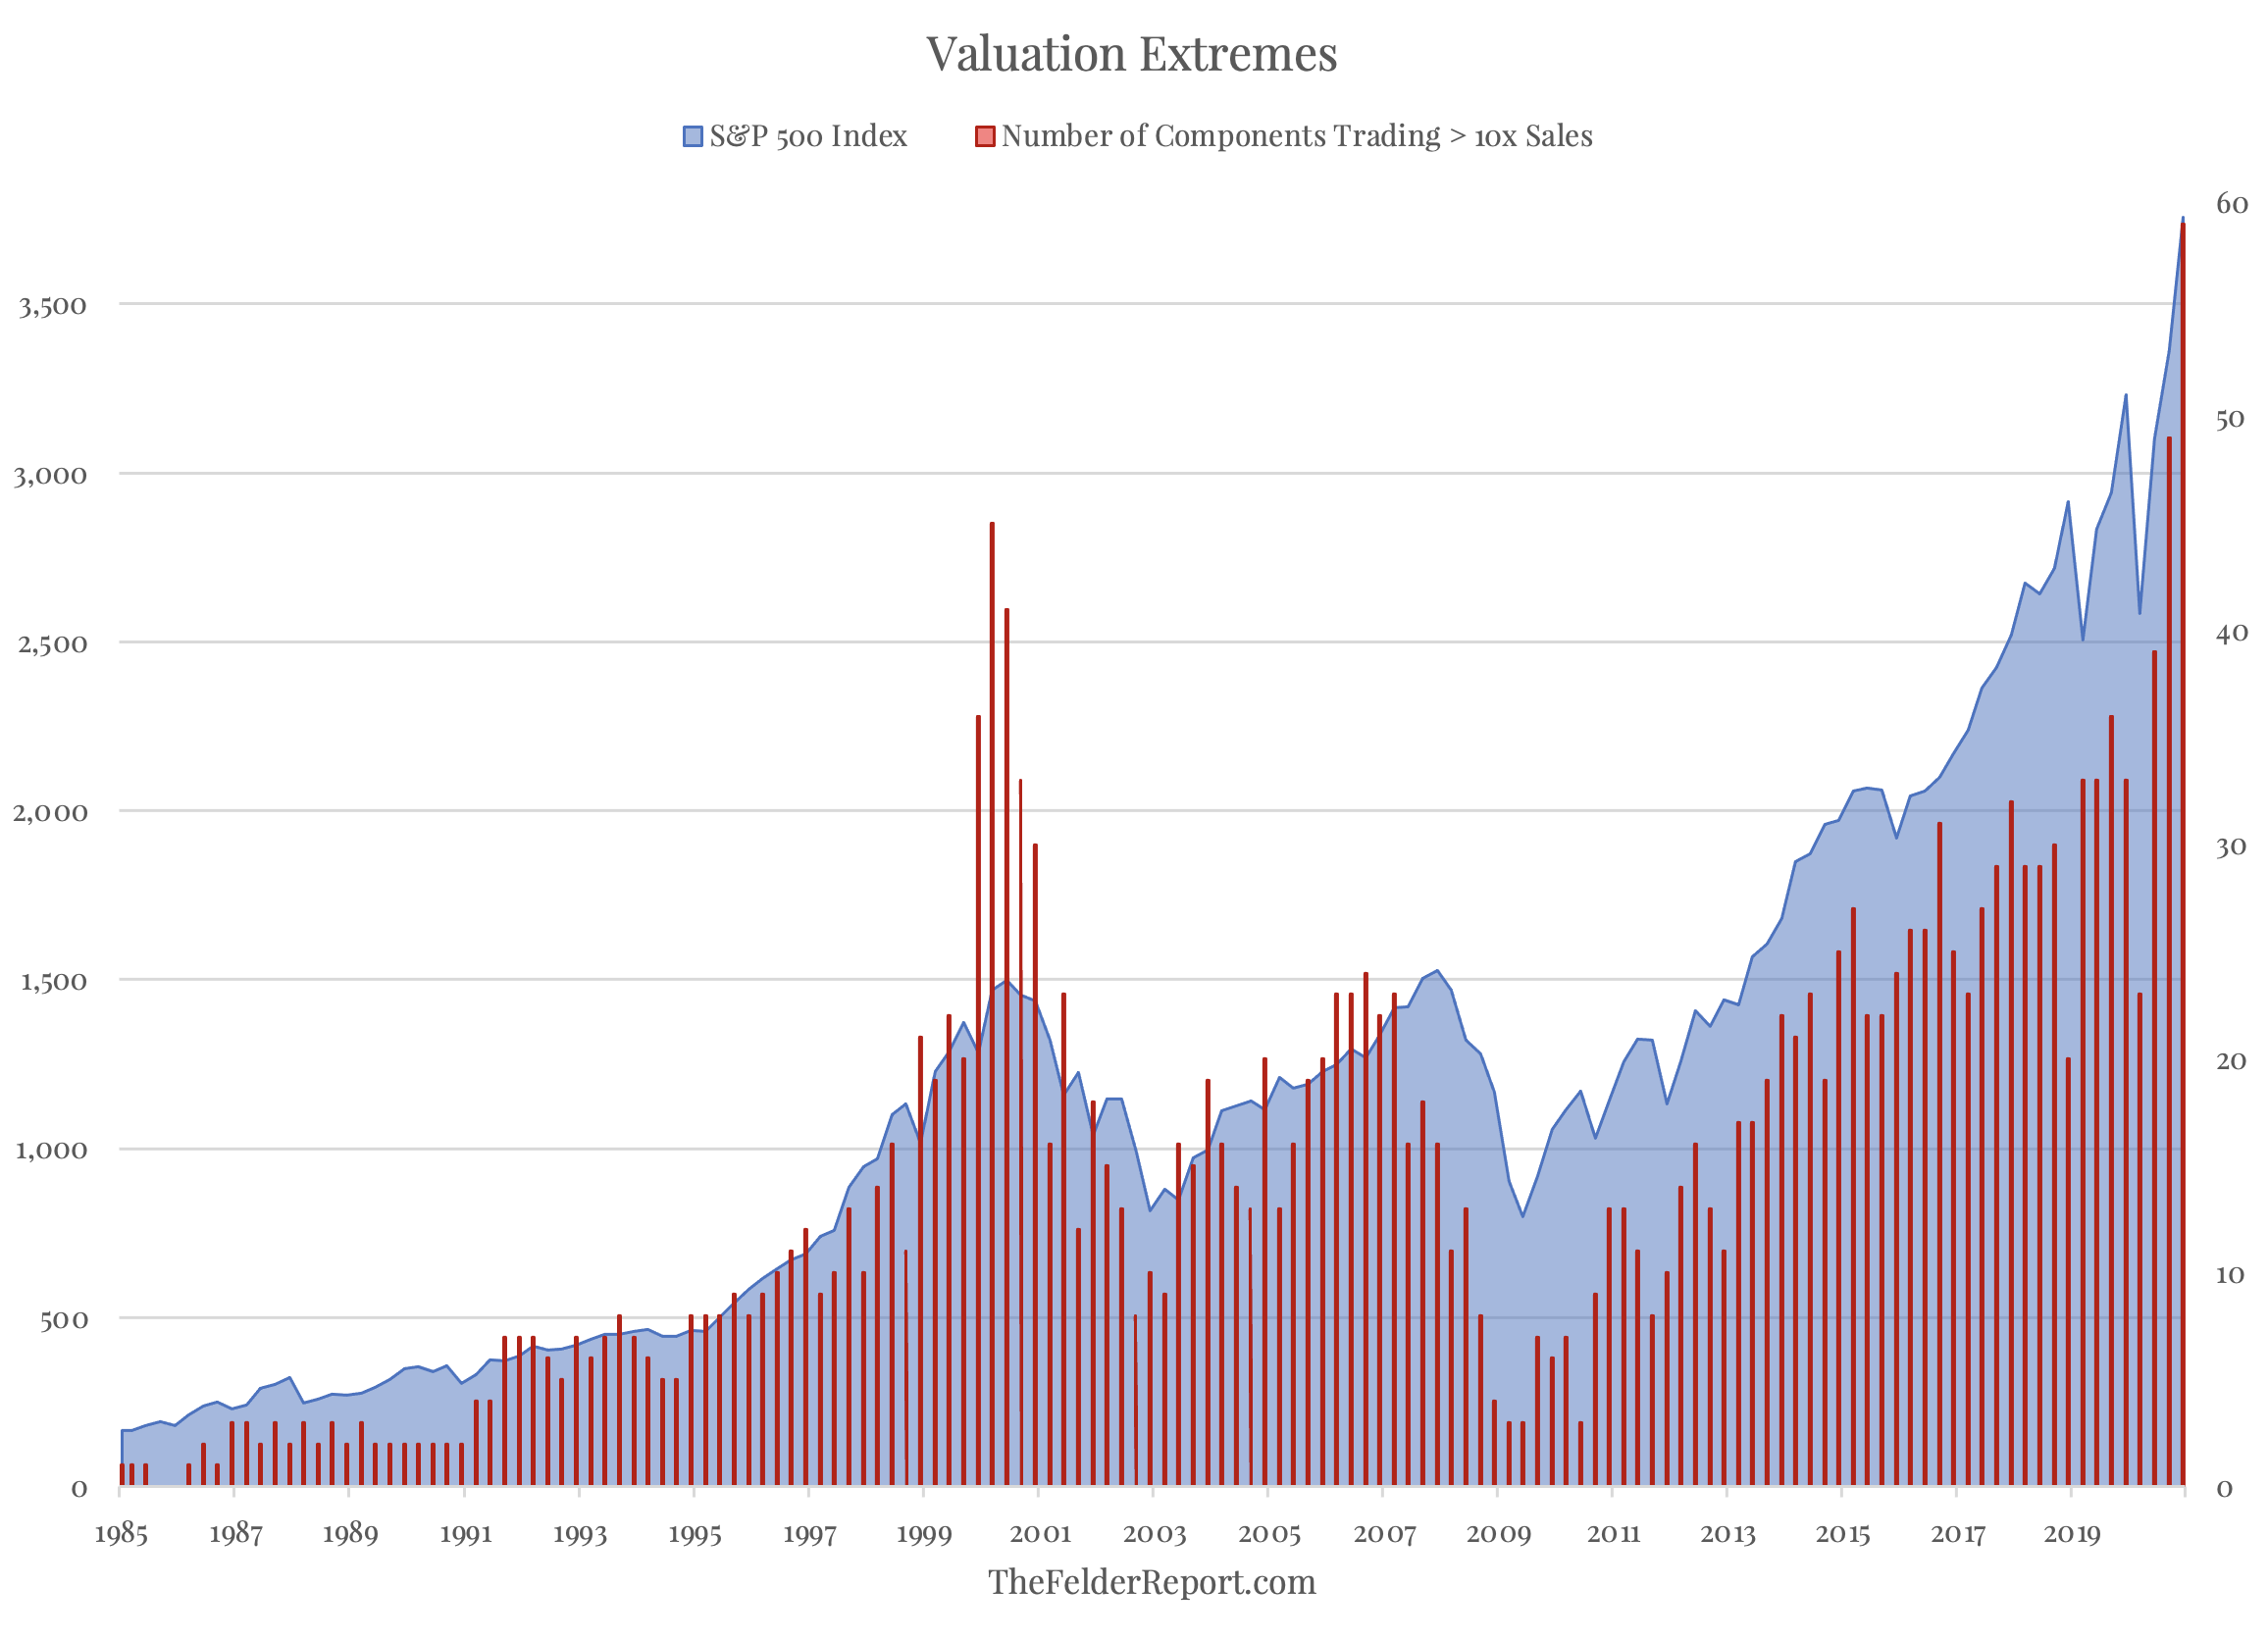 S&P 500 Index Valuations